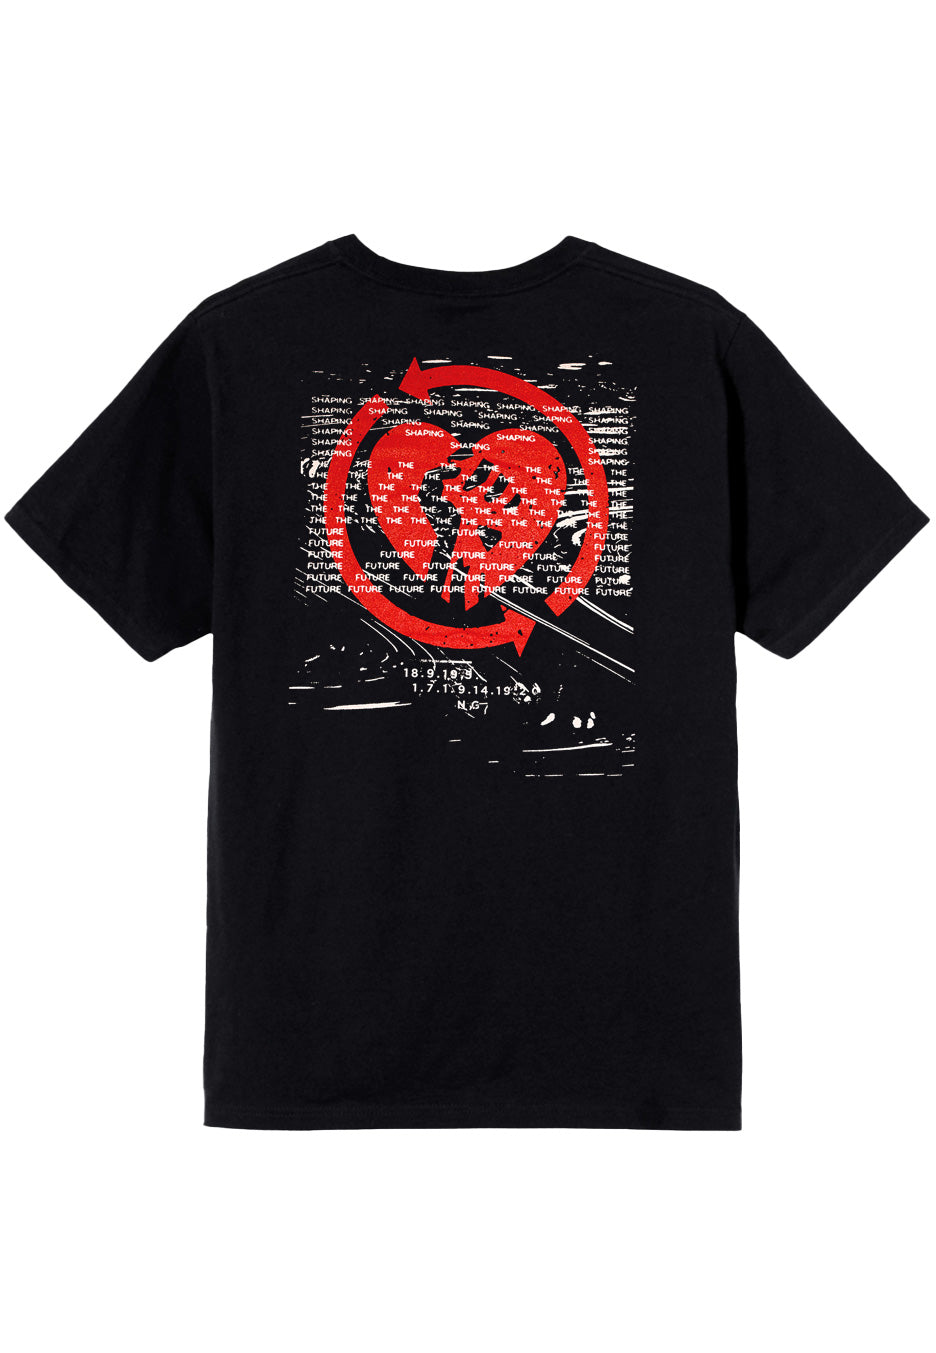 Rise Against - Nowhere Generation Future - T-Shirt